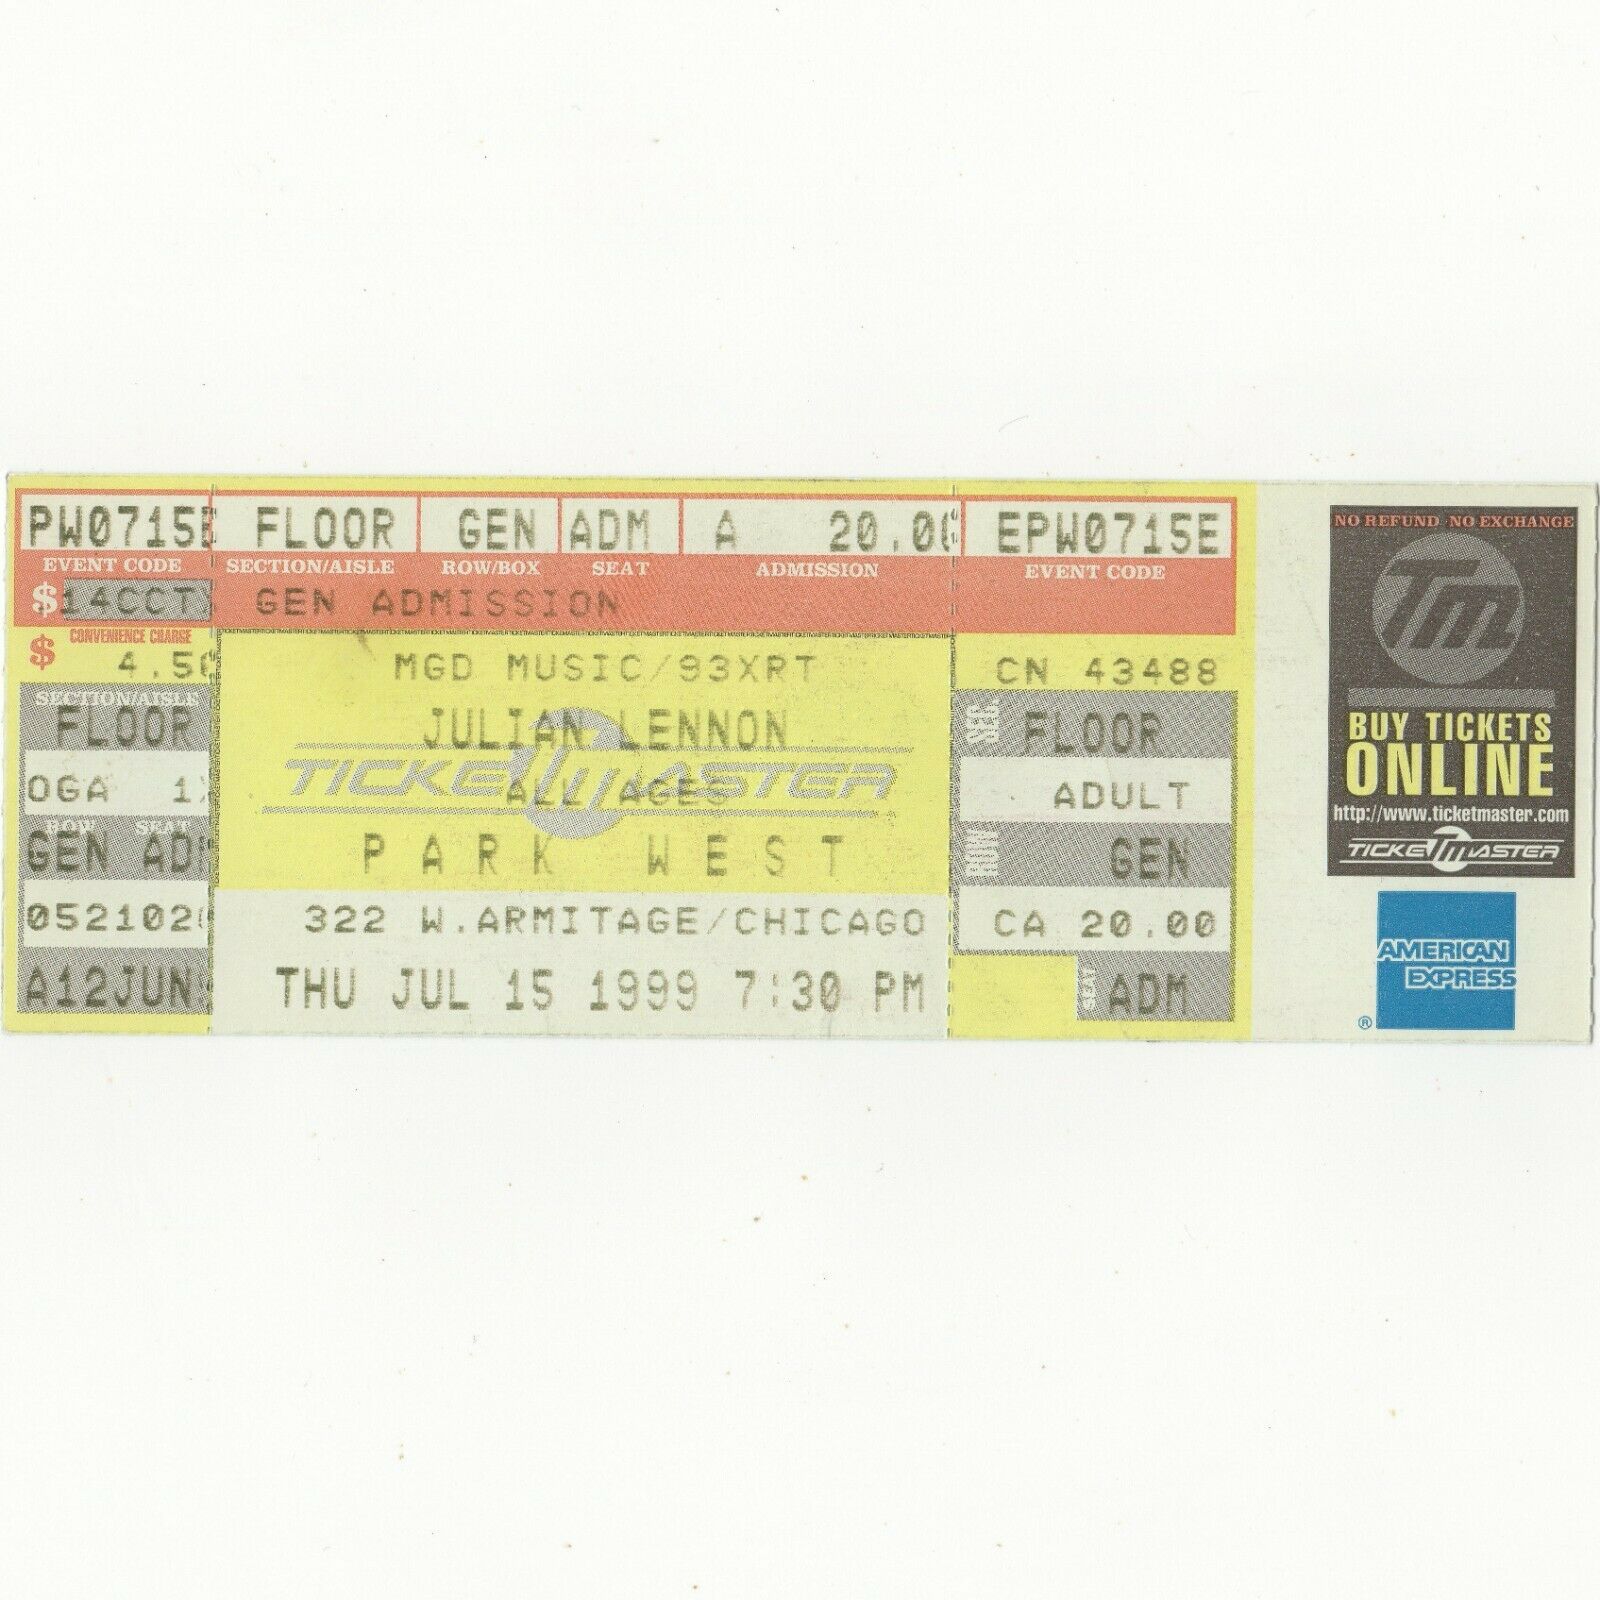 JULIAN LENNON Full Concert Ticket Stub CHICAGO IL 7/15/99 PARK WEST THE BEATLES